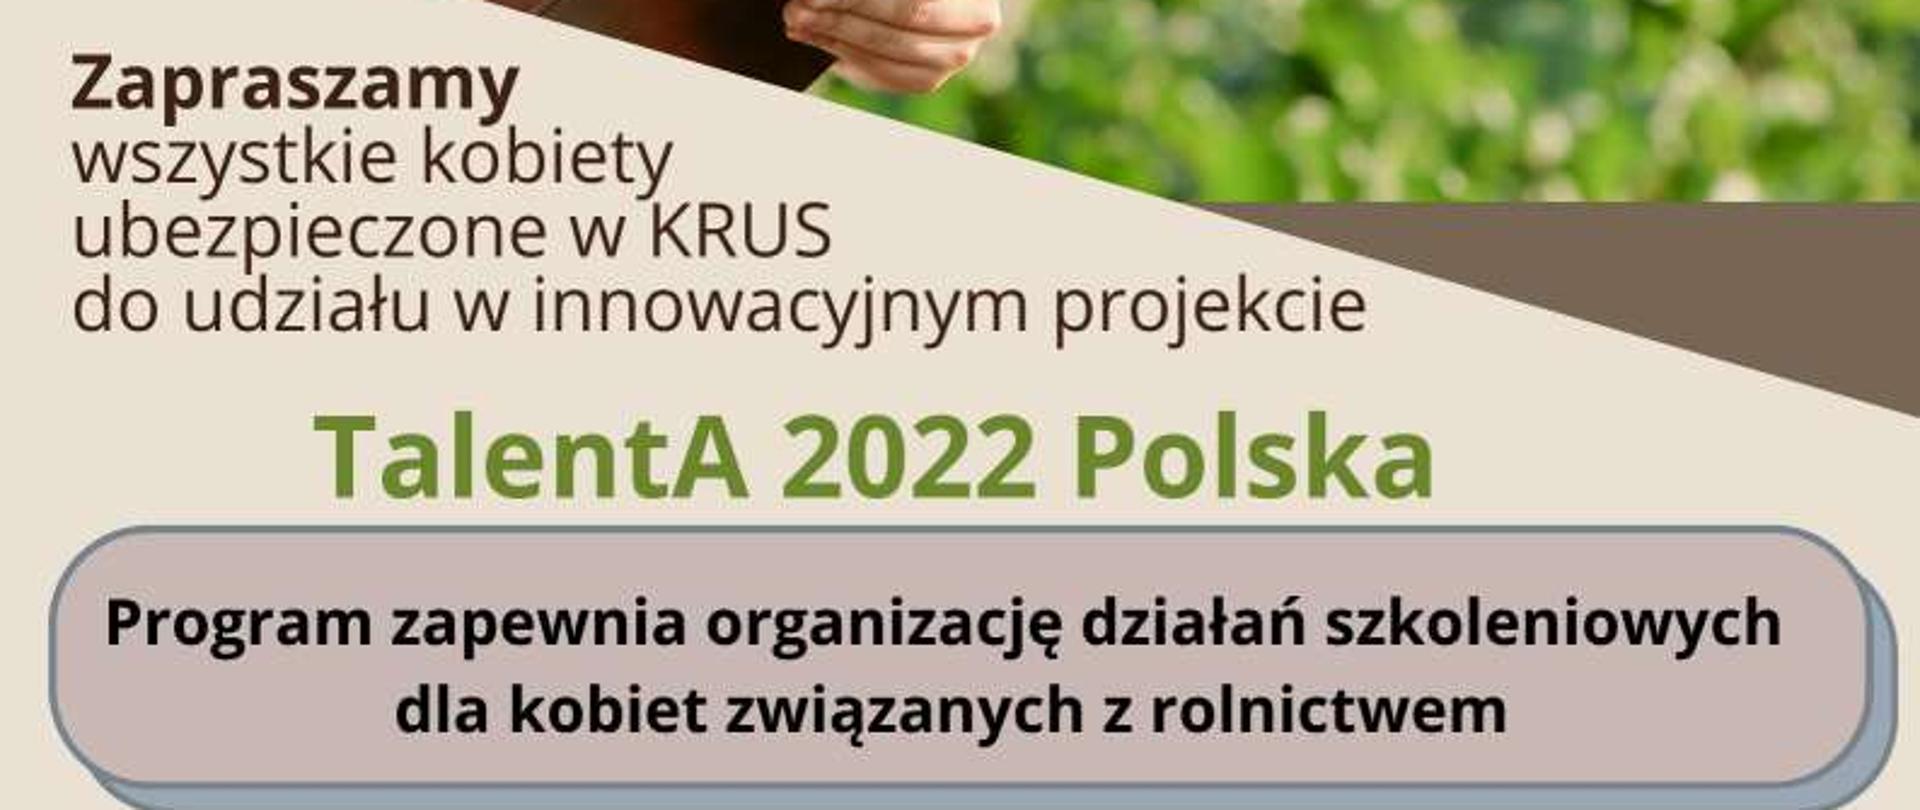 Plakat promujący projekt TalentA 2022